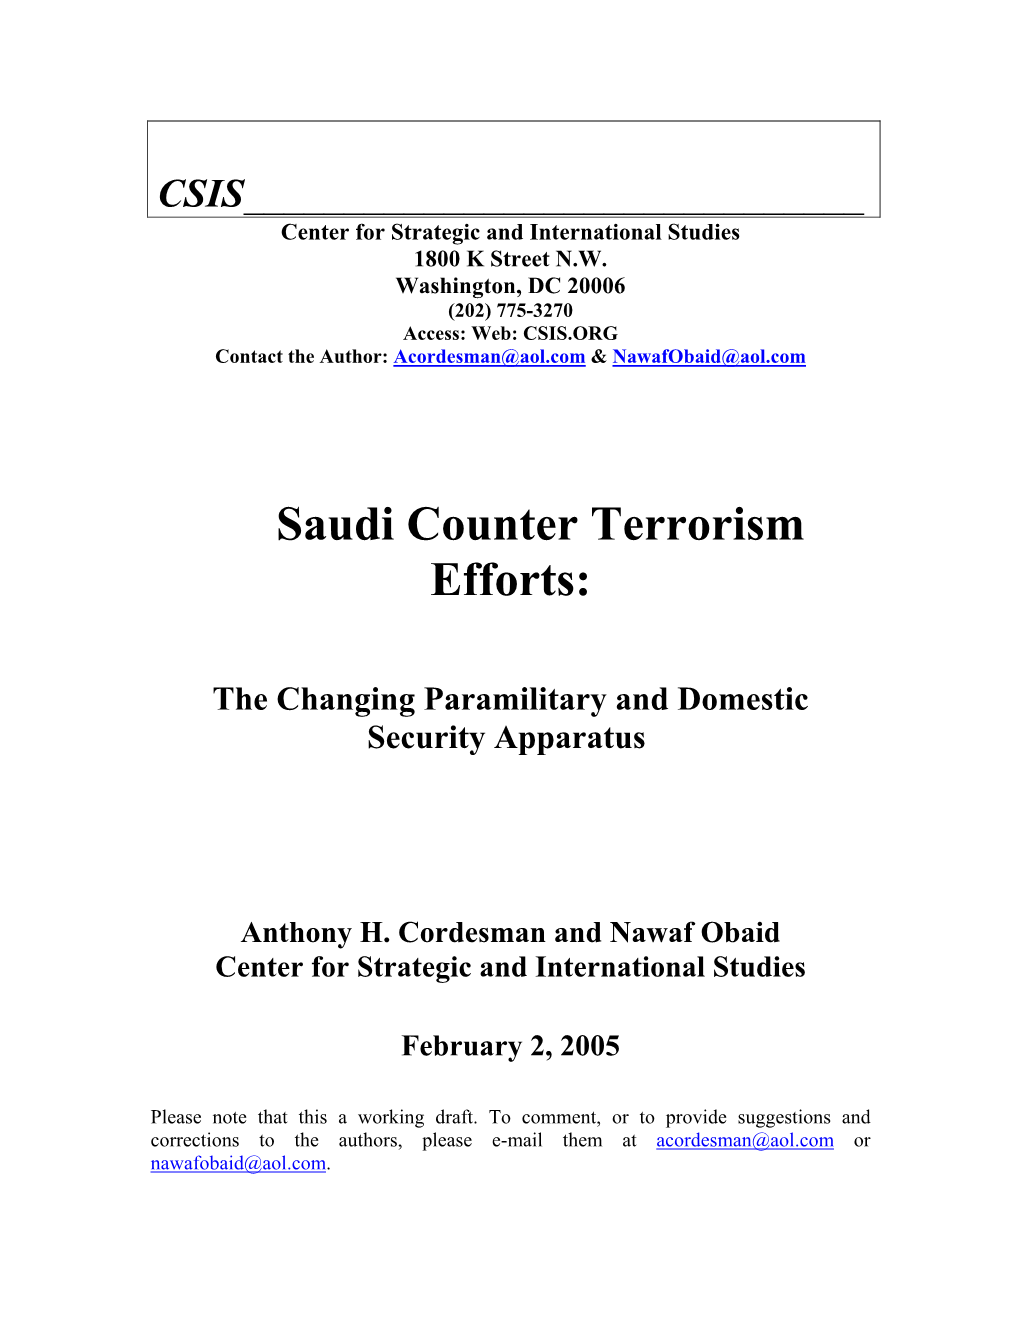 Saudi Counter Terrorism Efforts